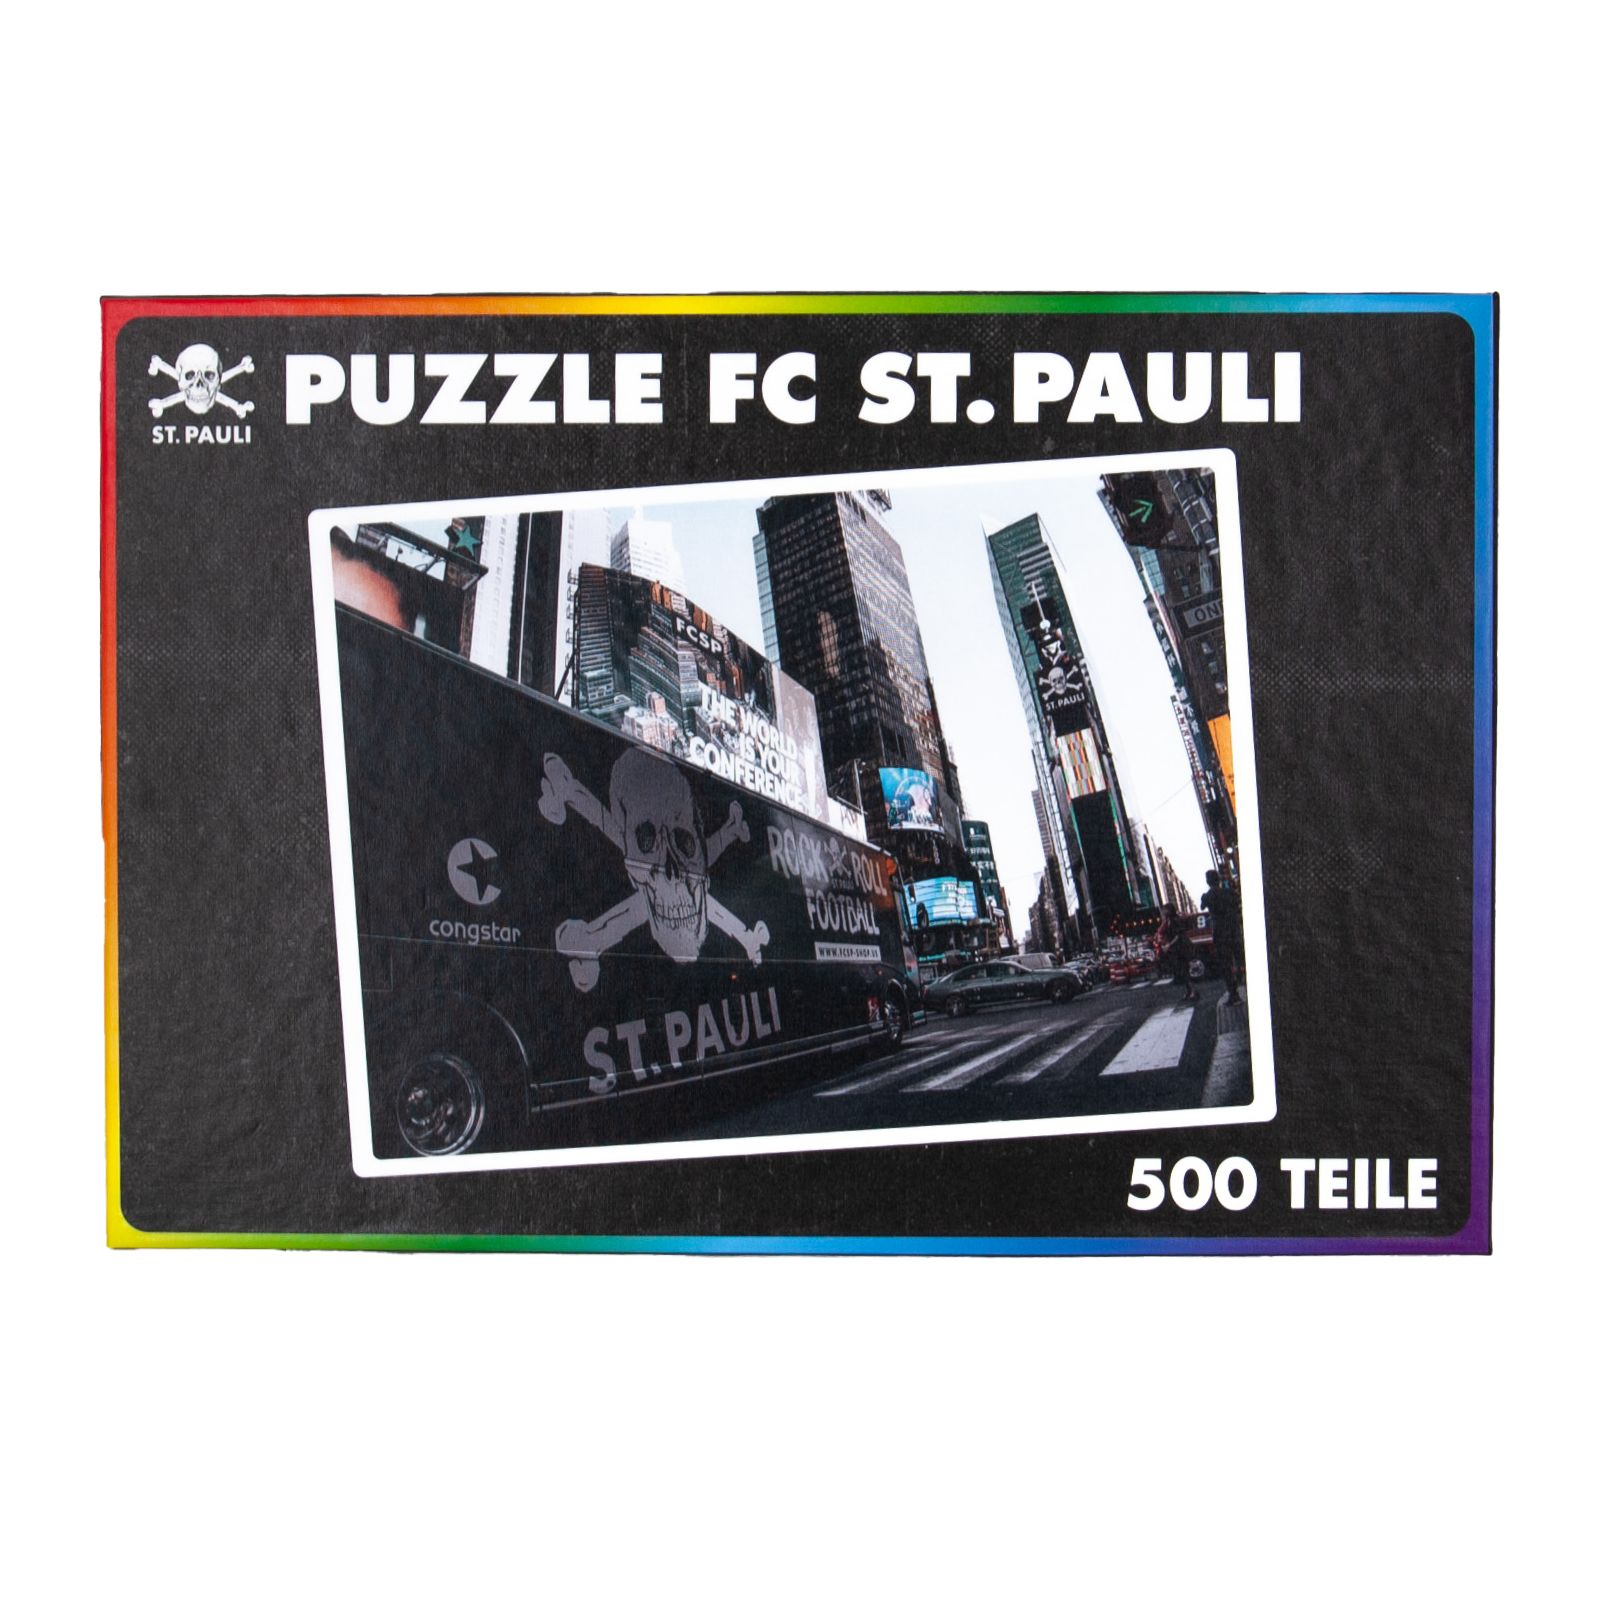 FC St. Pauli - Foto Puzzle Mannschaftsbus in New York, 500 Teile - bunt